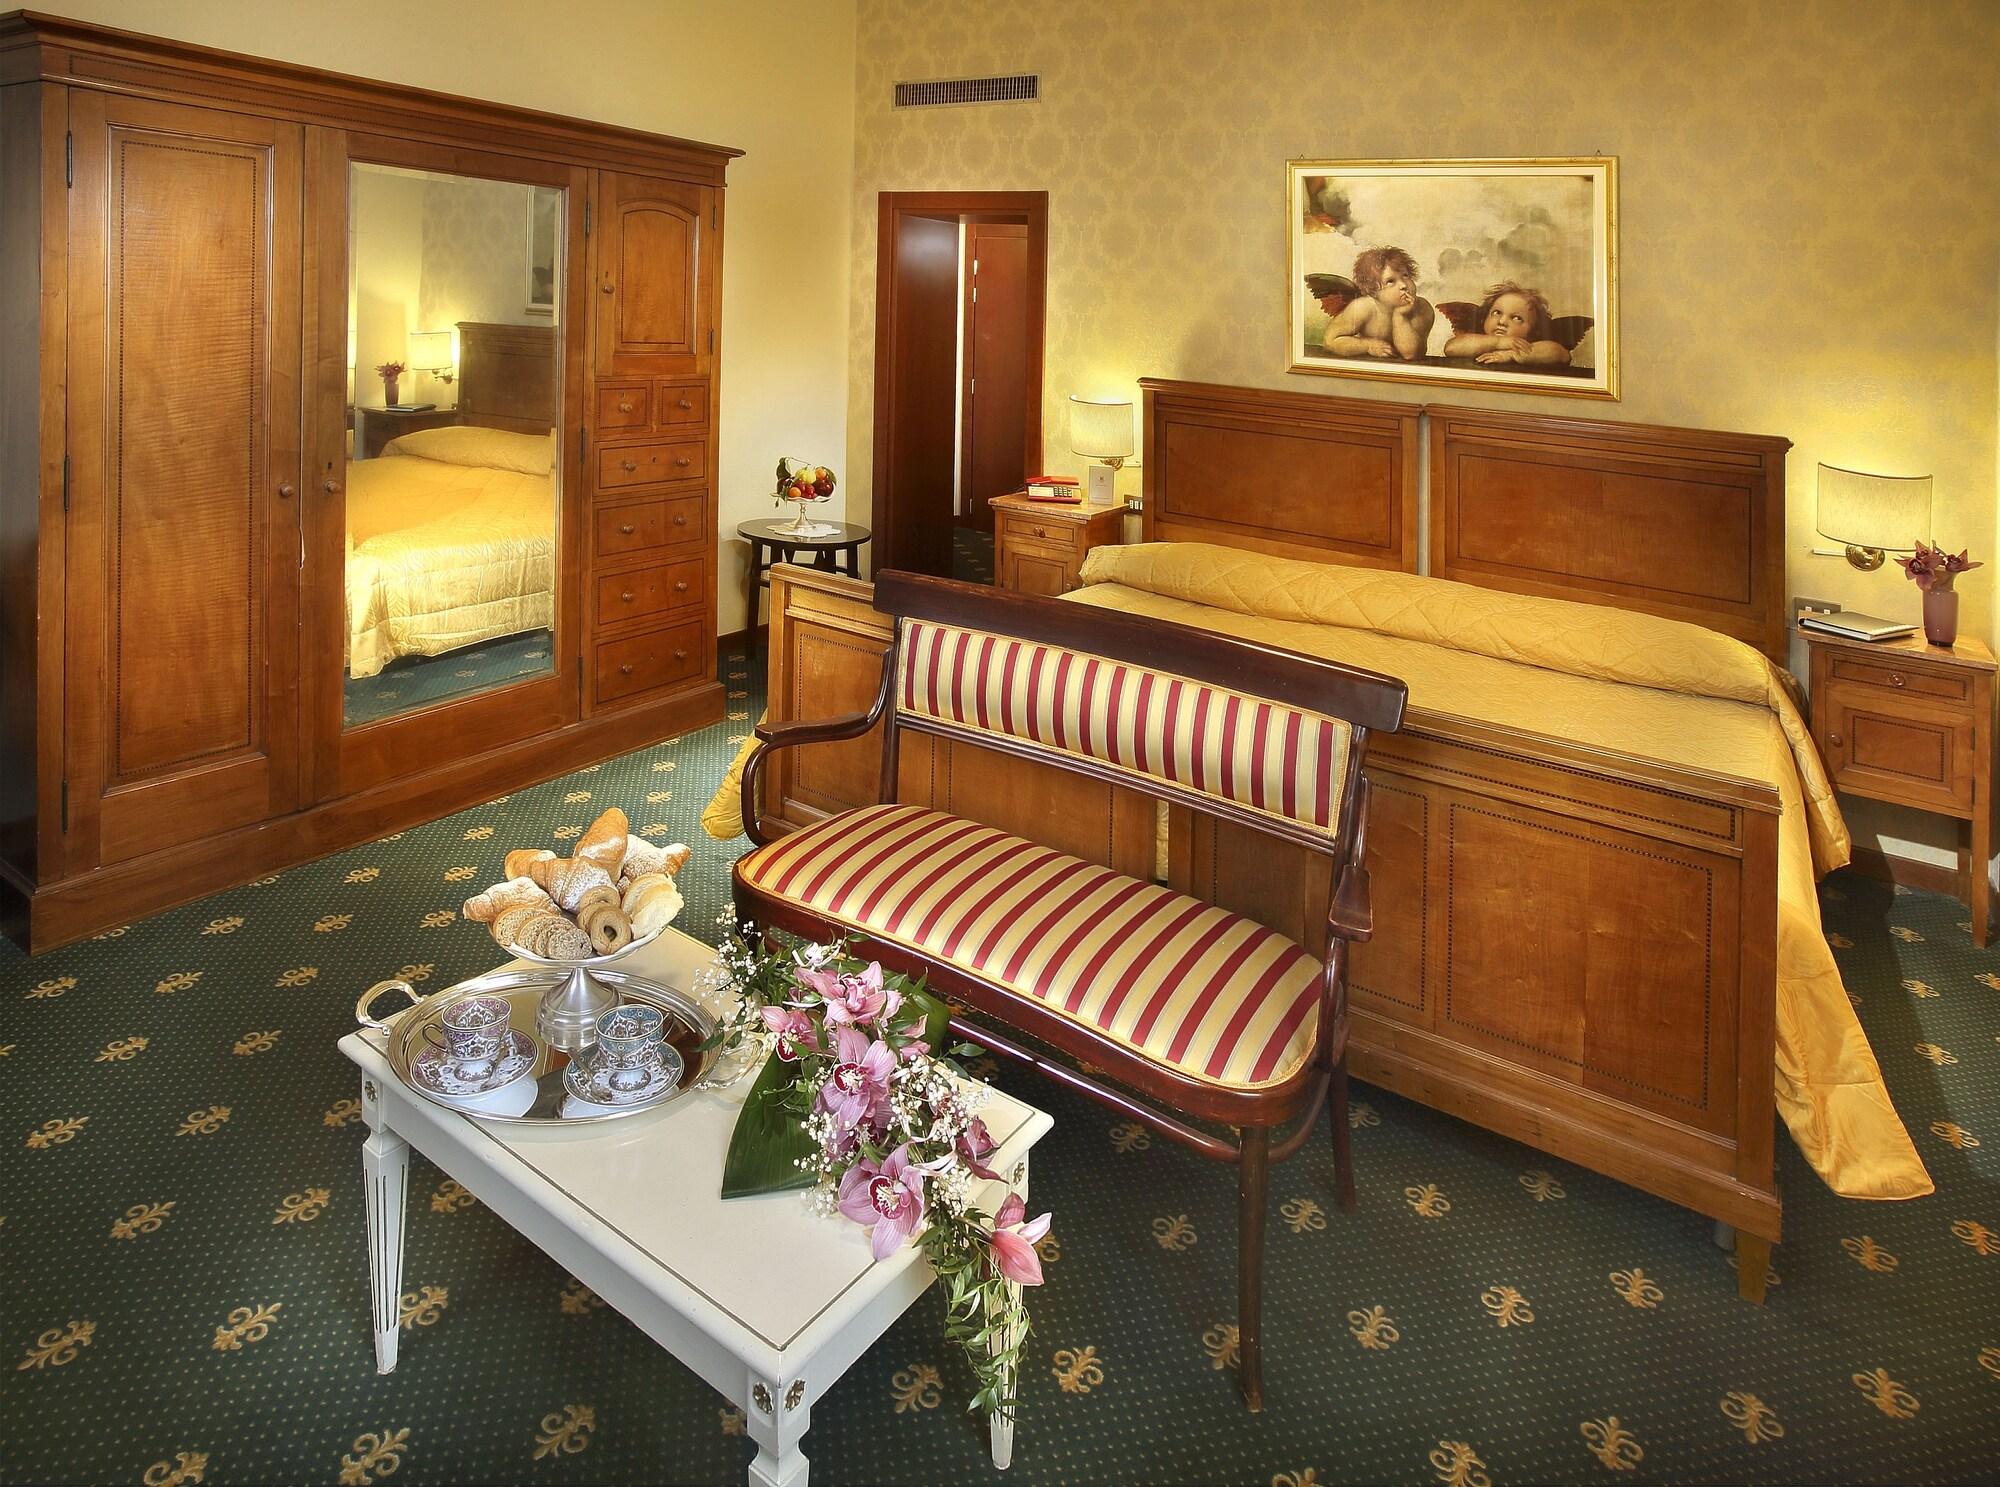 Grand Hotel Plaza & Locanda Maggiore Монтекатини-Терме Экстерьер фото